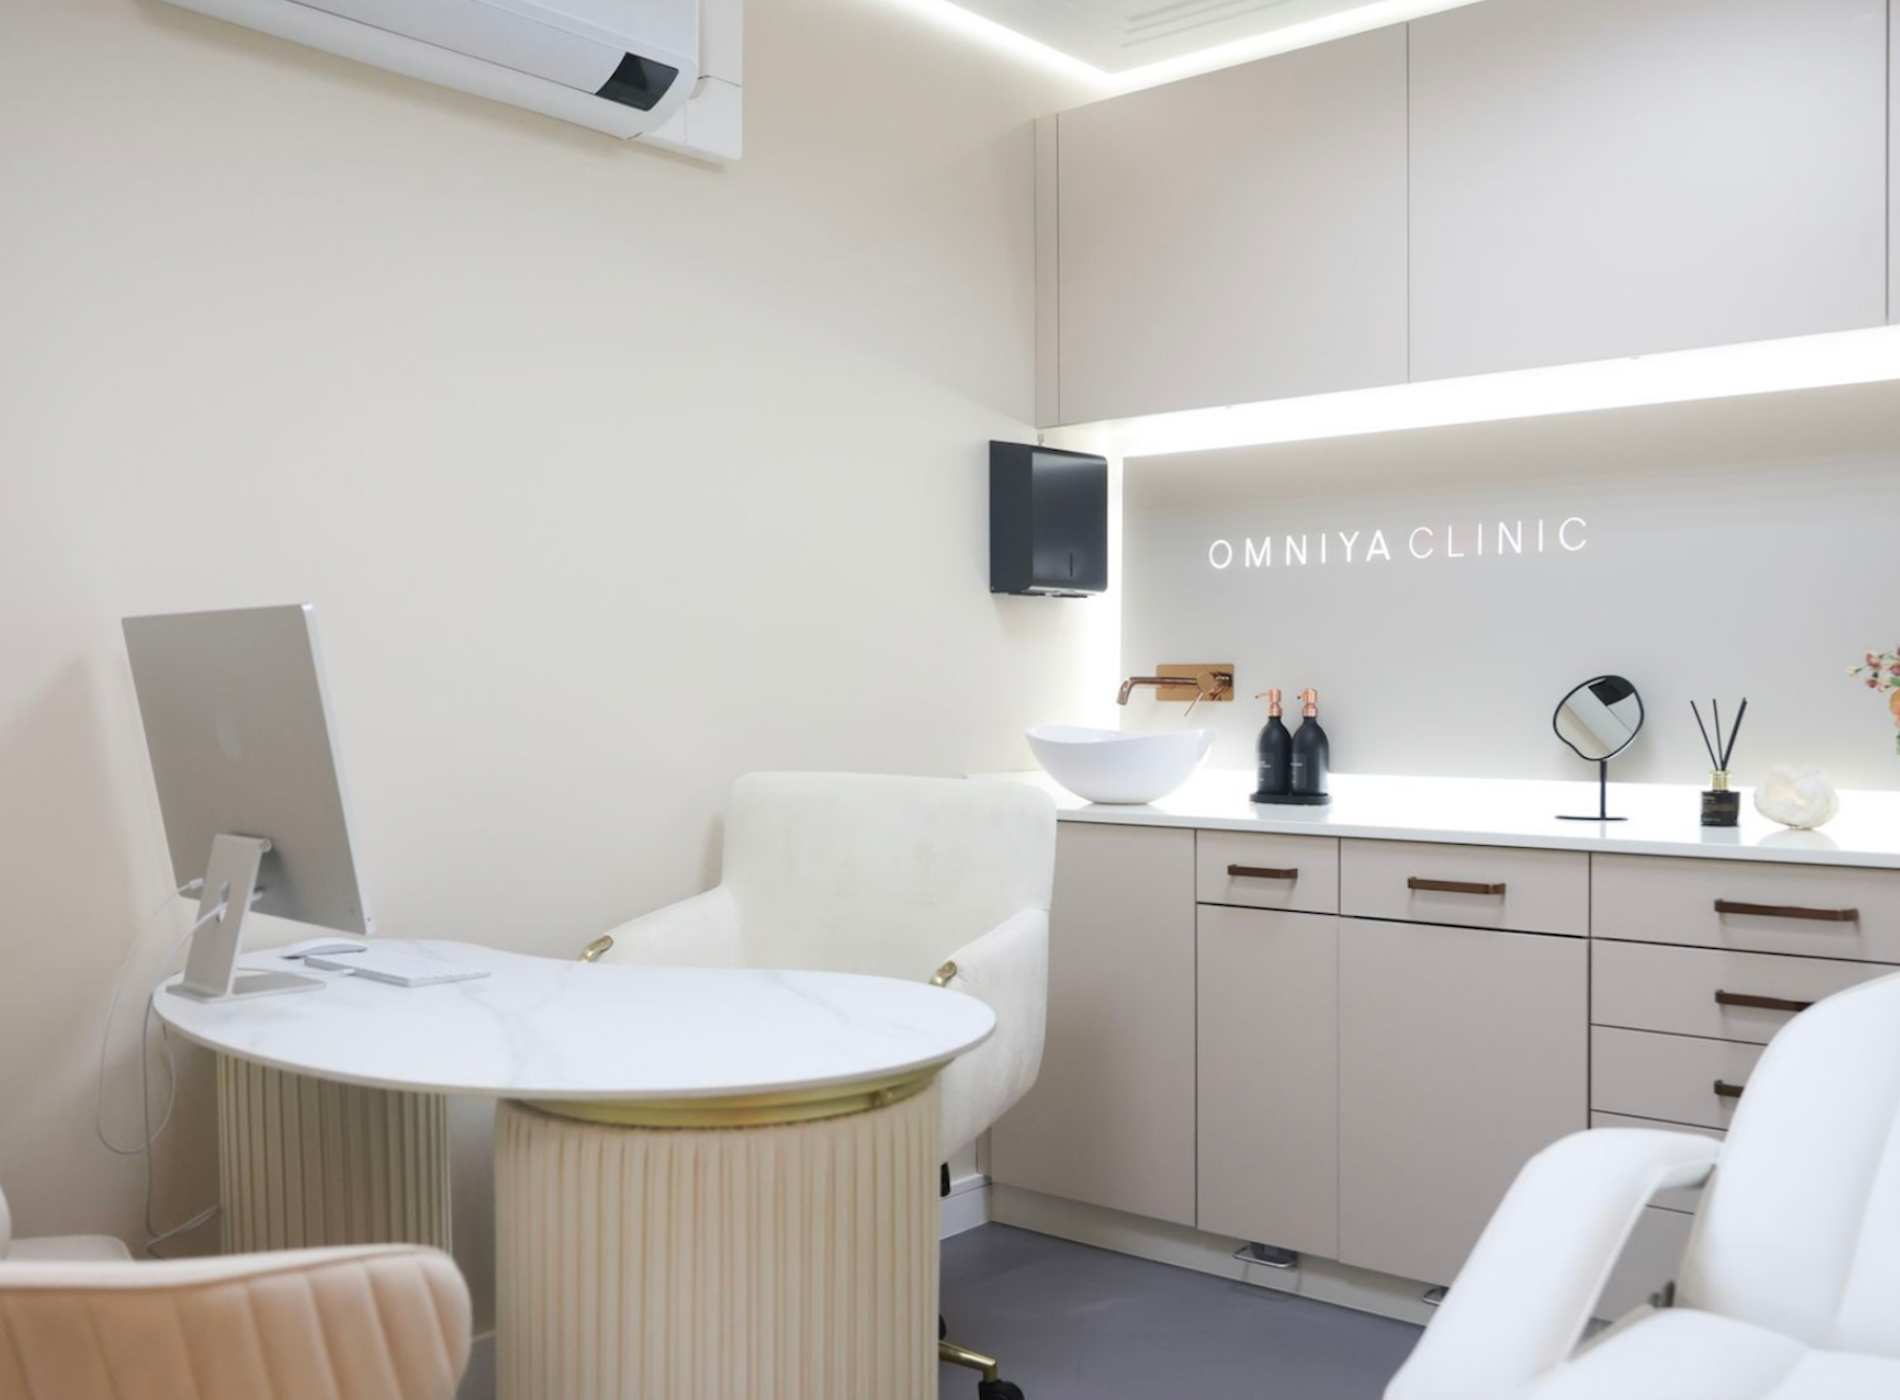 Omniya Clinic London - Image of the interior of Omniya